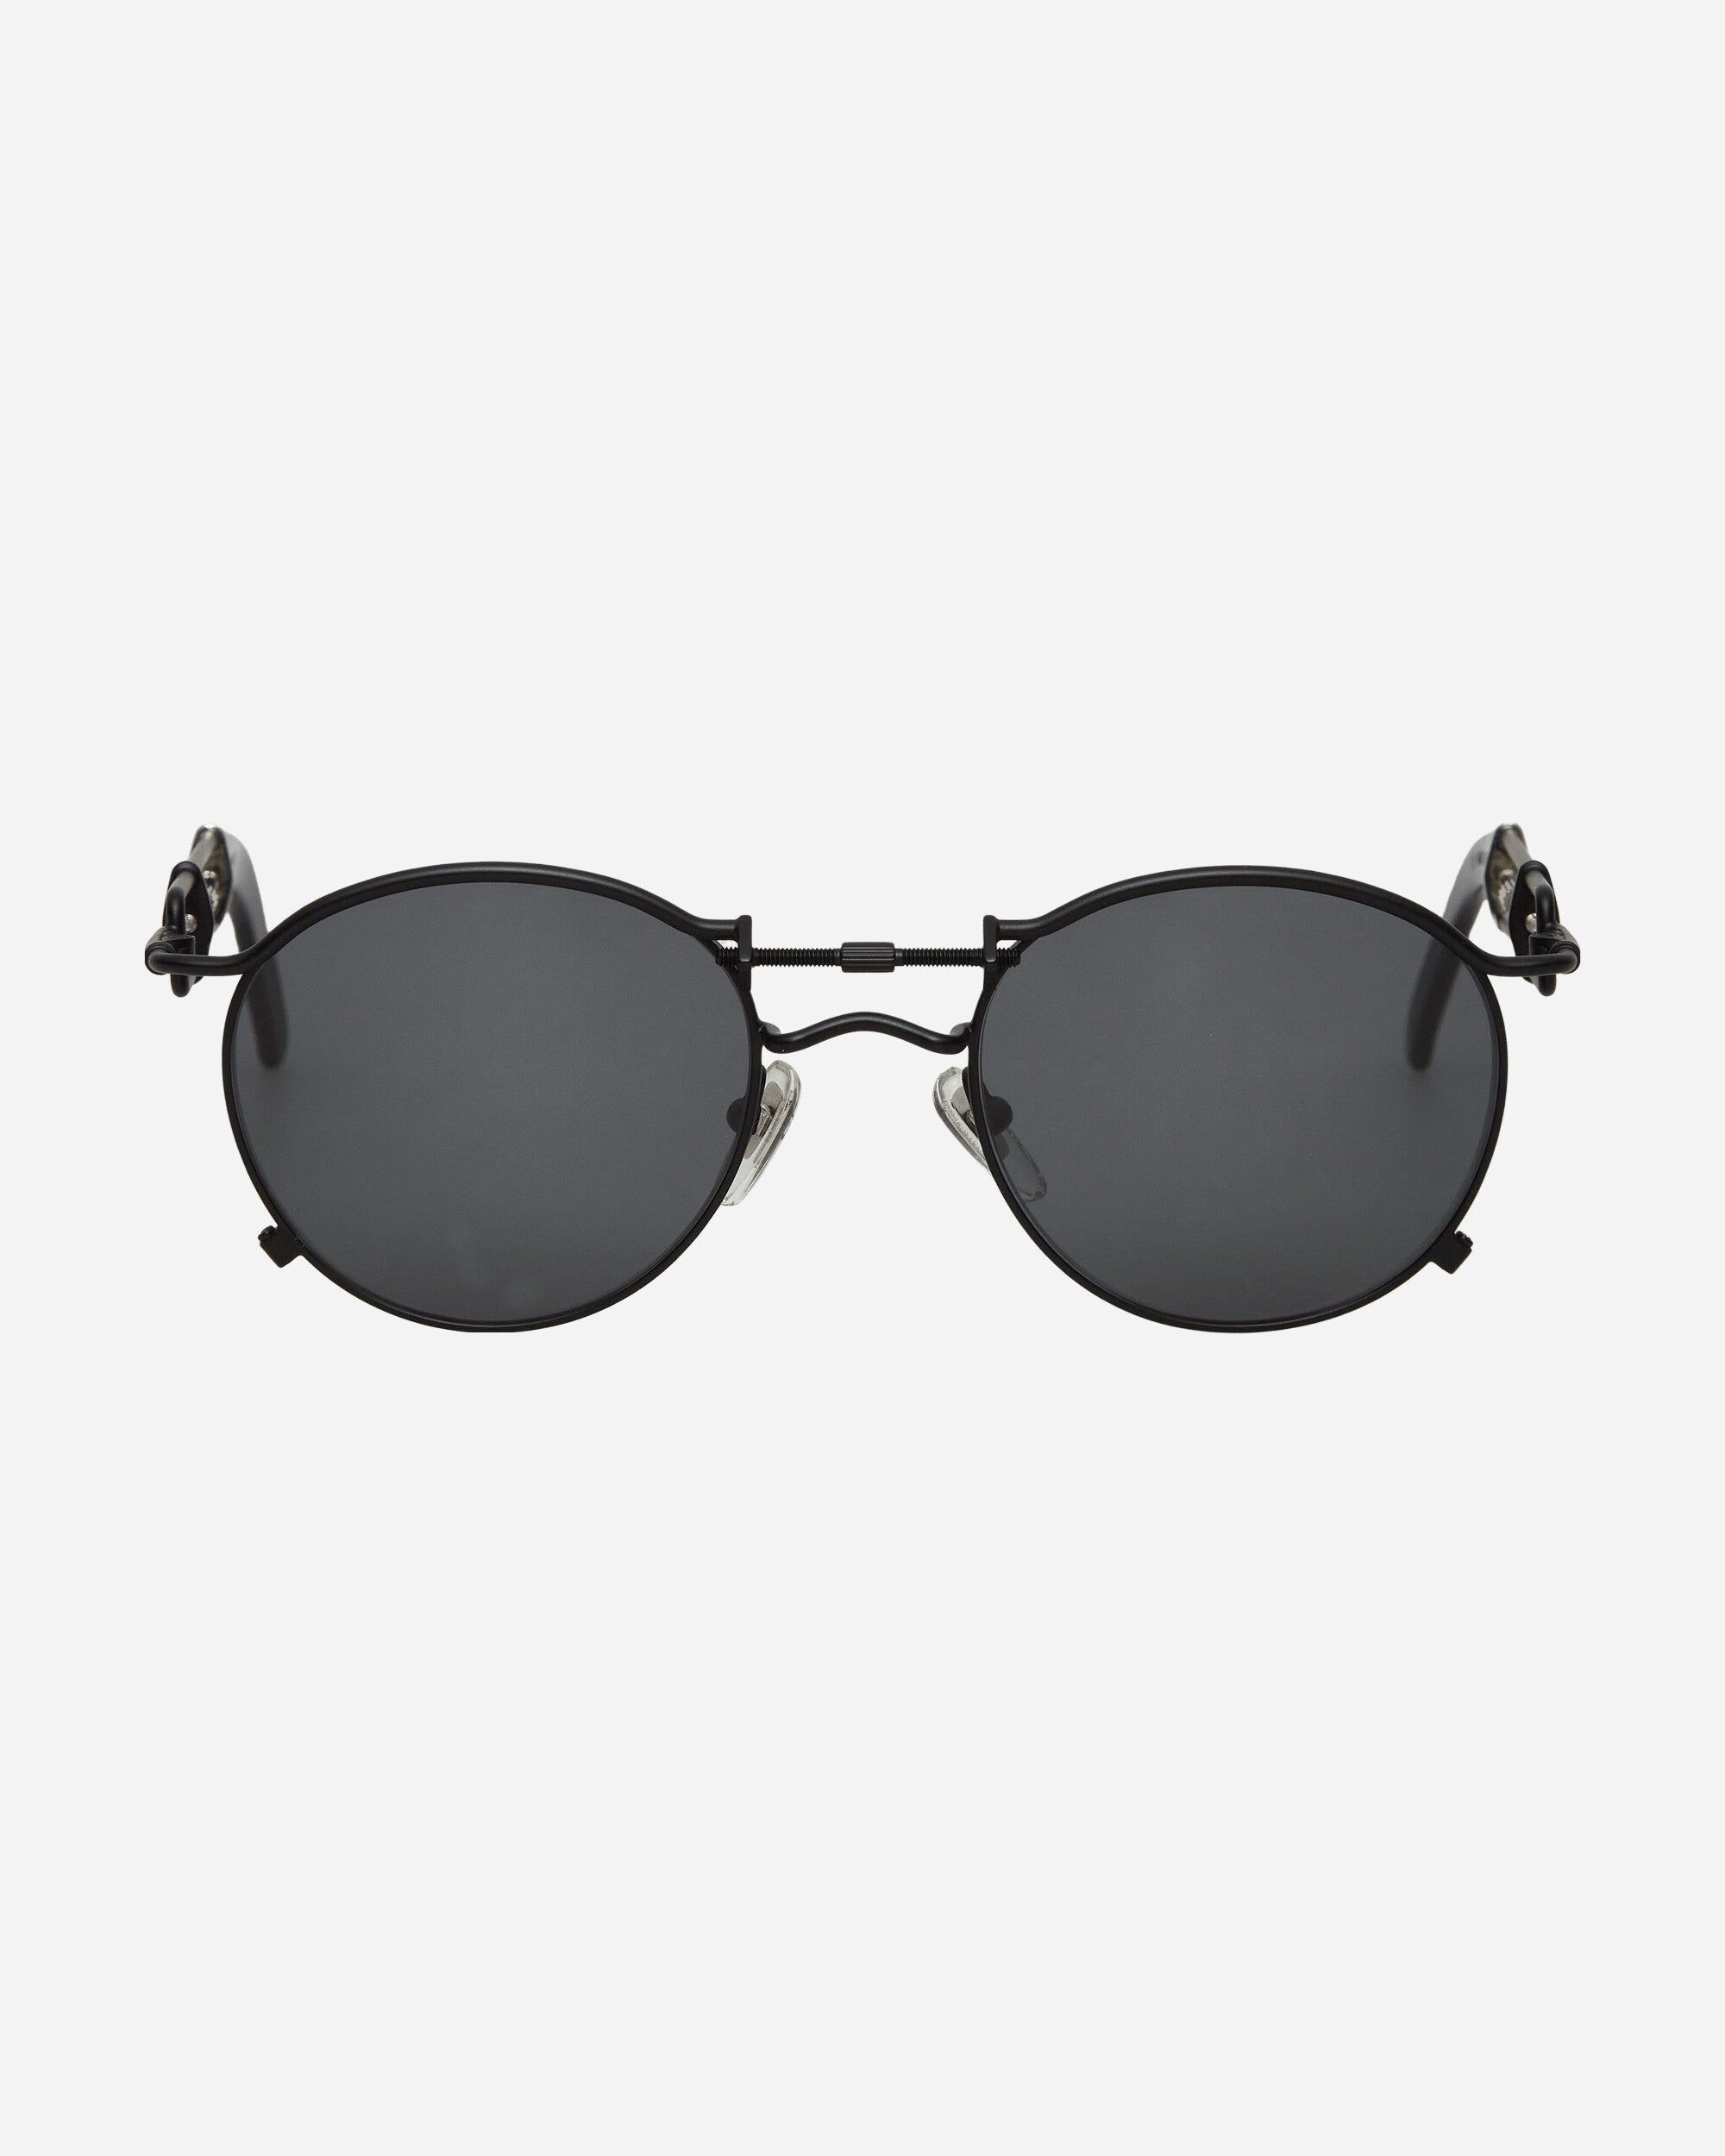 Jean Paul Gaultier Wmns Lunette Pas De Vis Black Eyewear Sunglasses LU002-X031 00